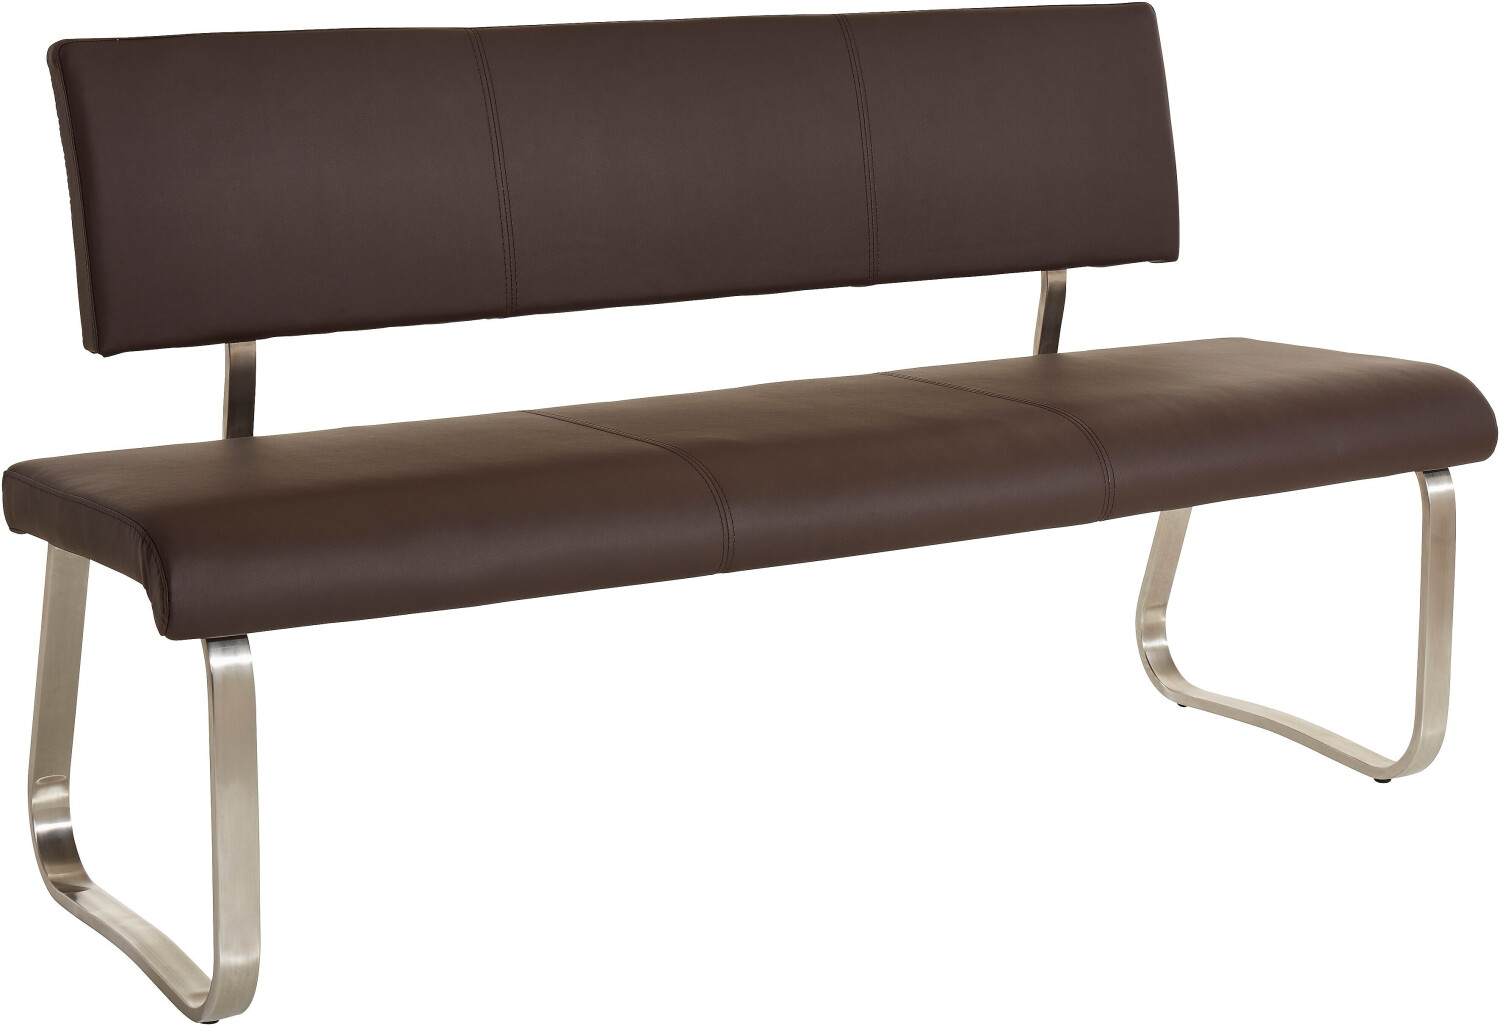 Furniture braun MCA Preisvergleich | Arco ab € 155x86x59cm 269,00 bei